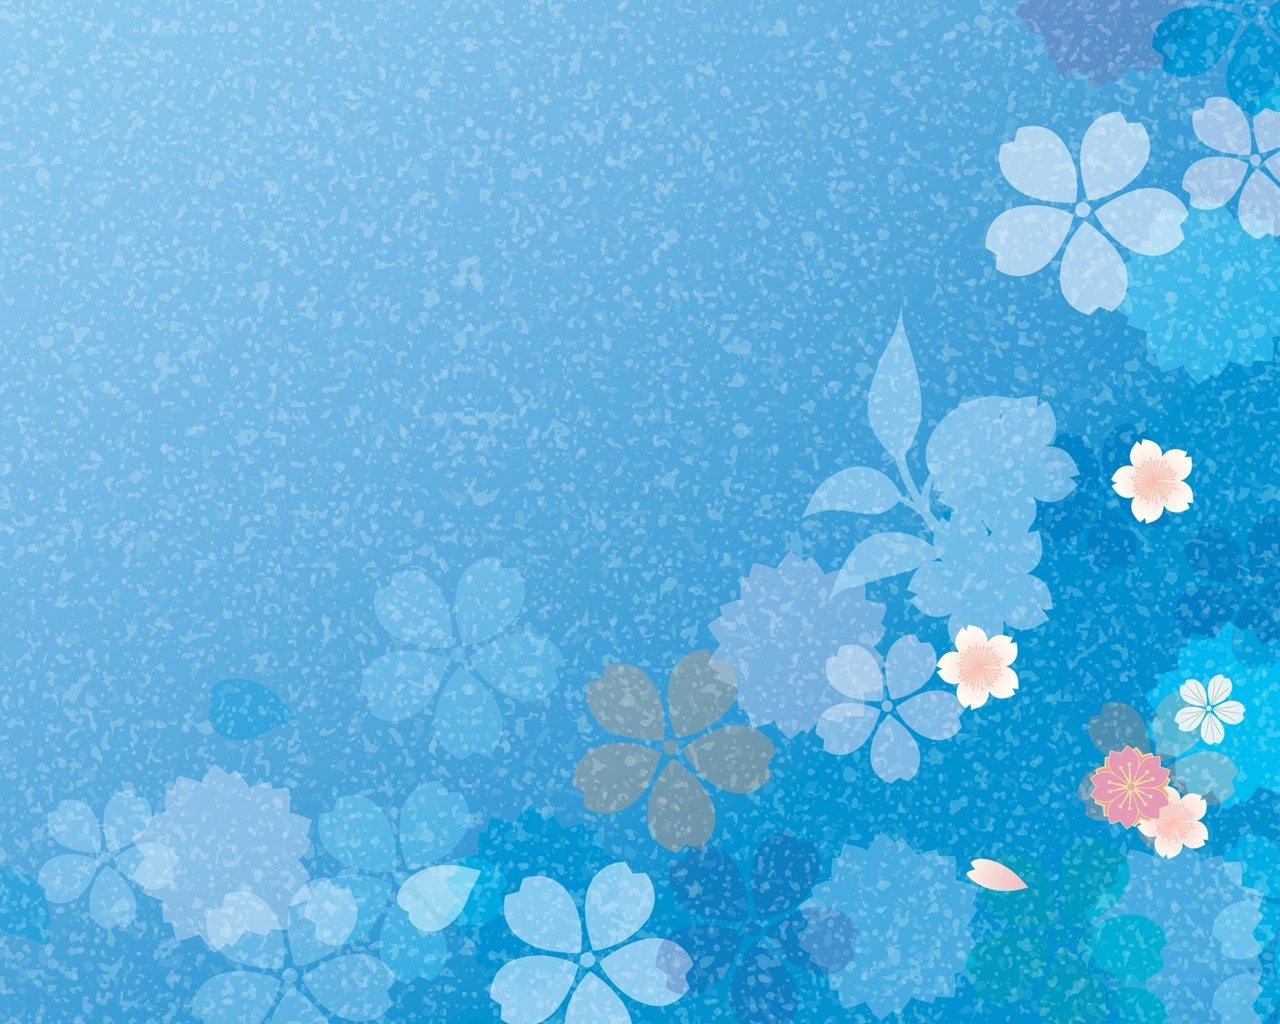 Flower Computer Wallpapers, Desktop Backgrounds 1280x1024 ID